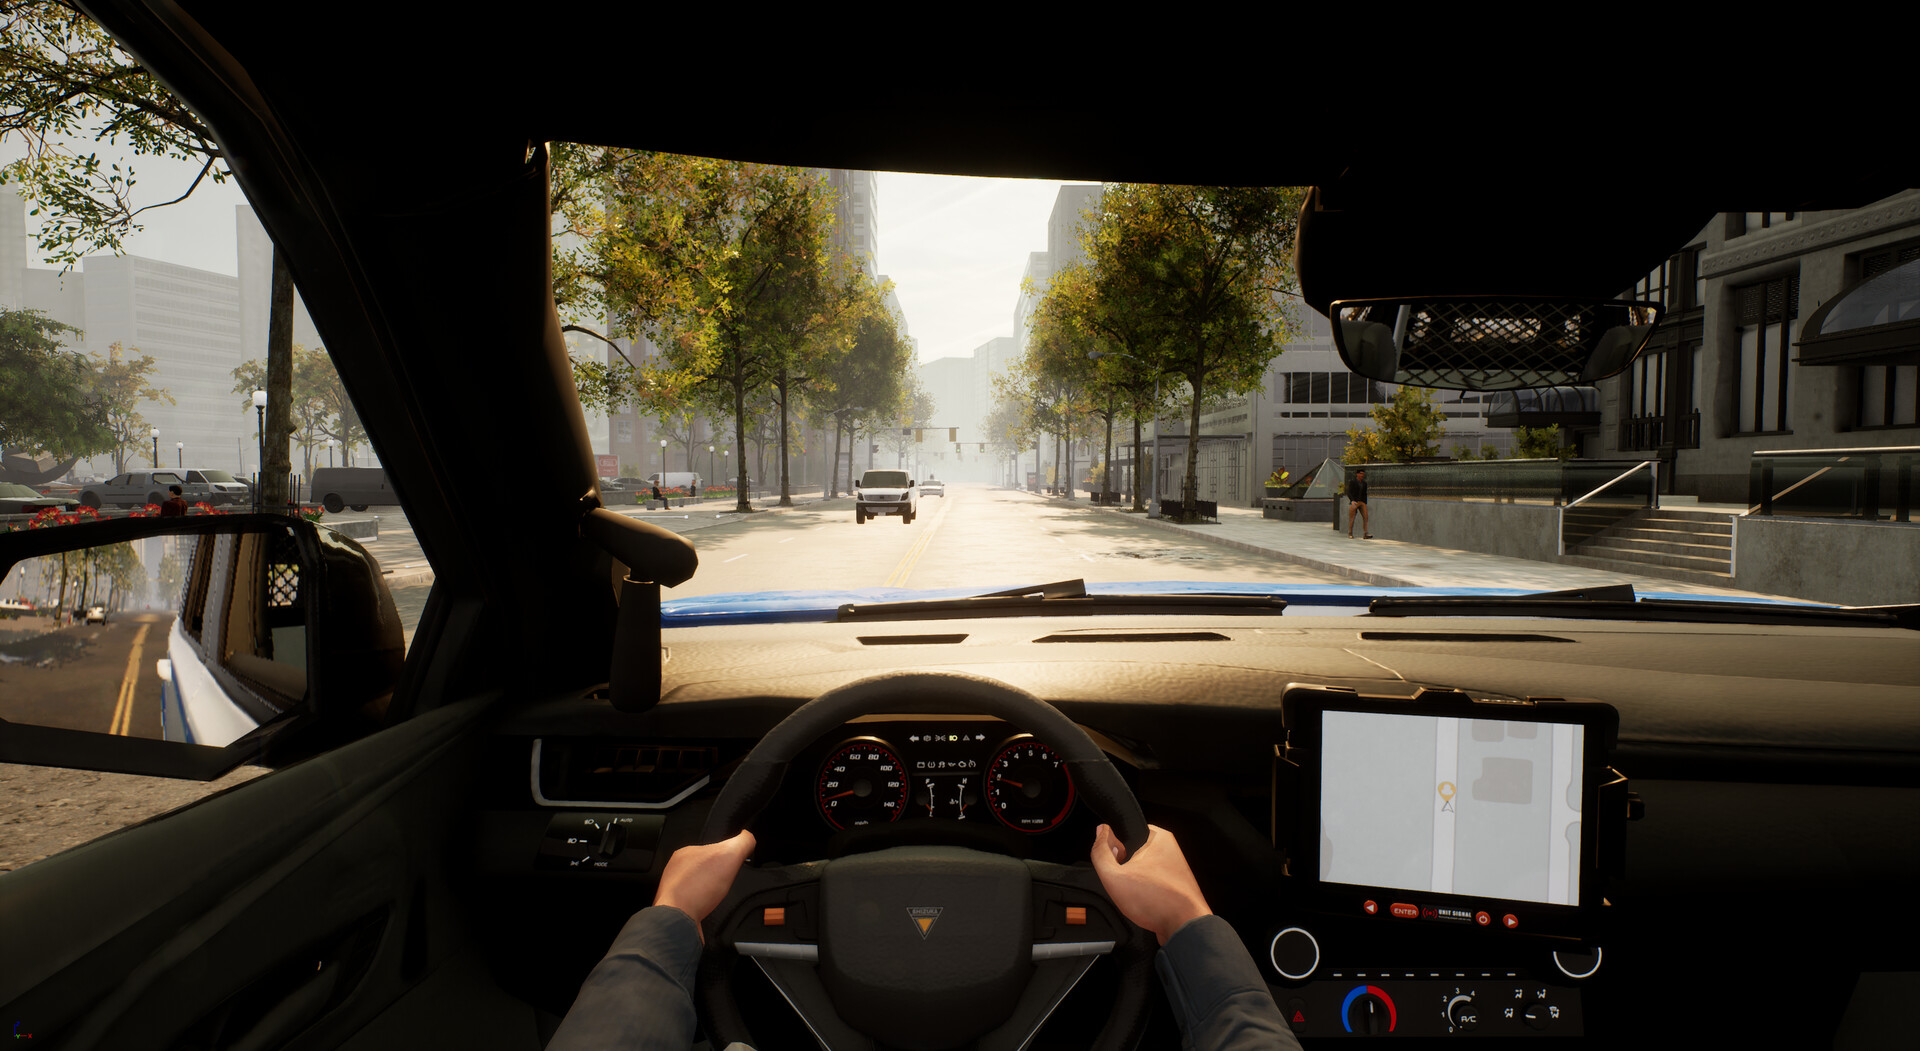 Police Simulator: Patrol Officers - Urban Terrain Vehicle DLC EU PS4 CD Key